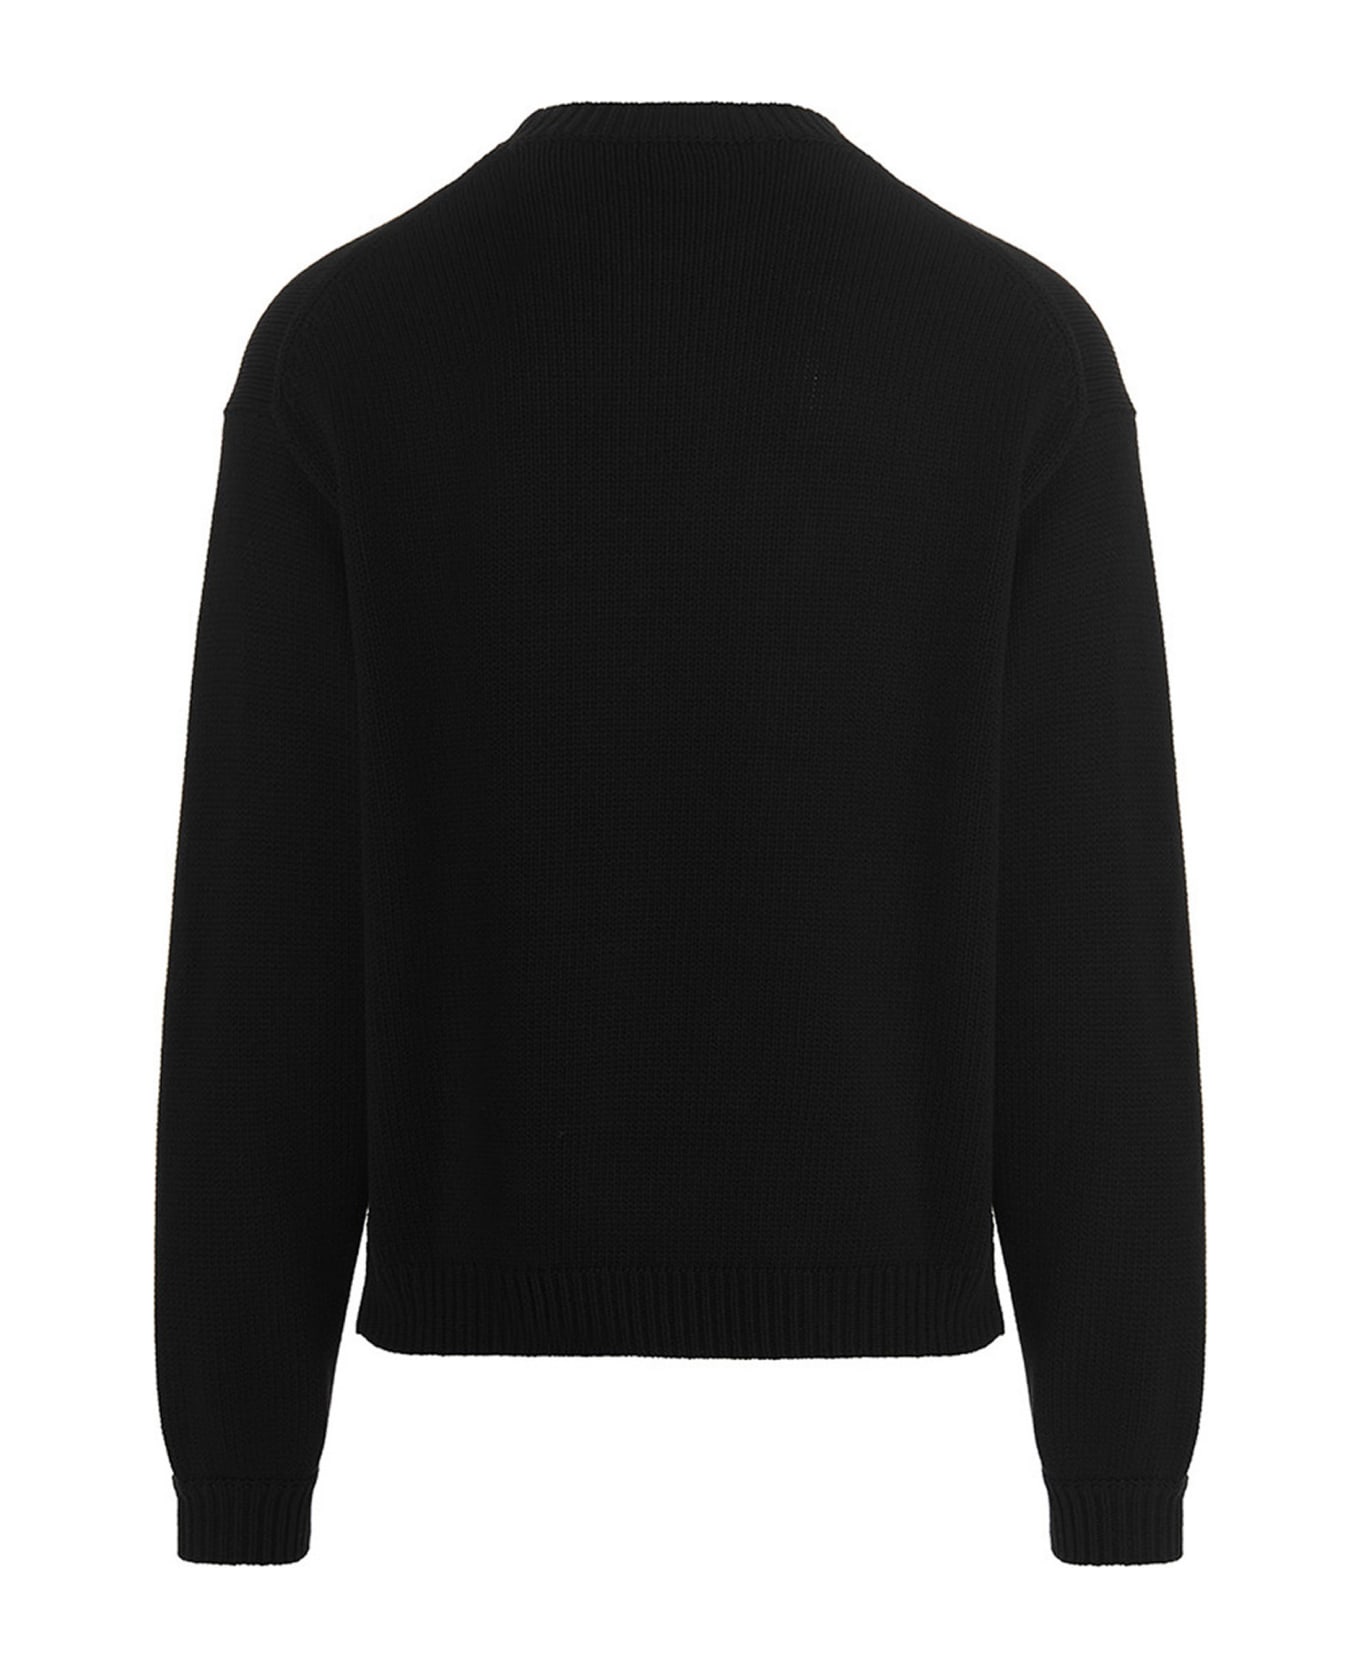 Kenzo ' Paris' Sweater - Nero